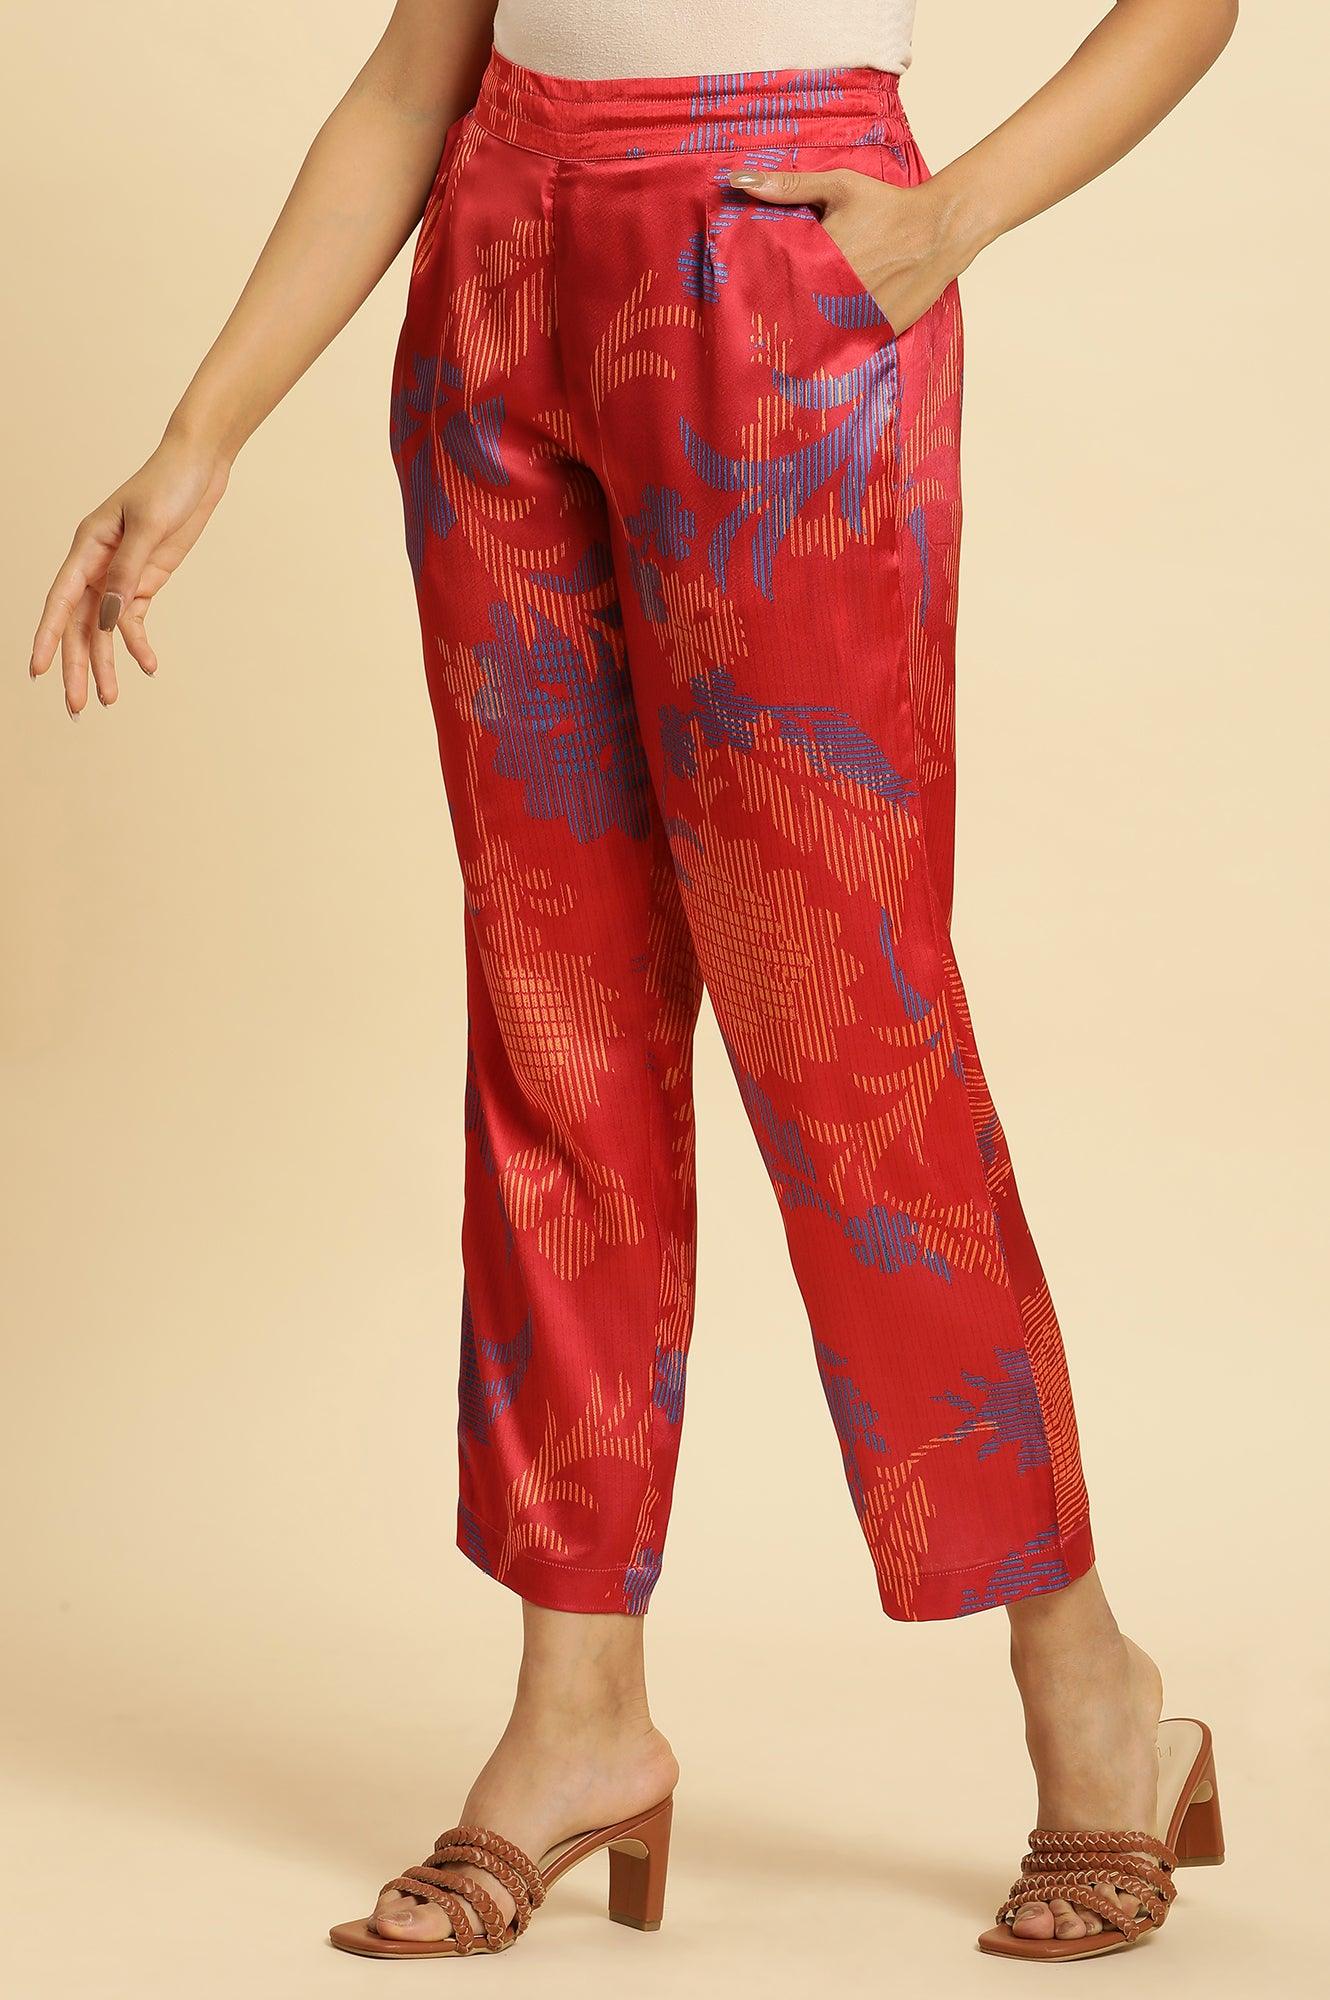 Bright Red Floral Printed Satin Pants - wforwoman